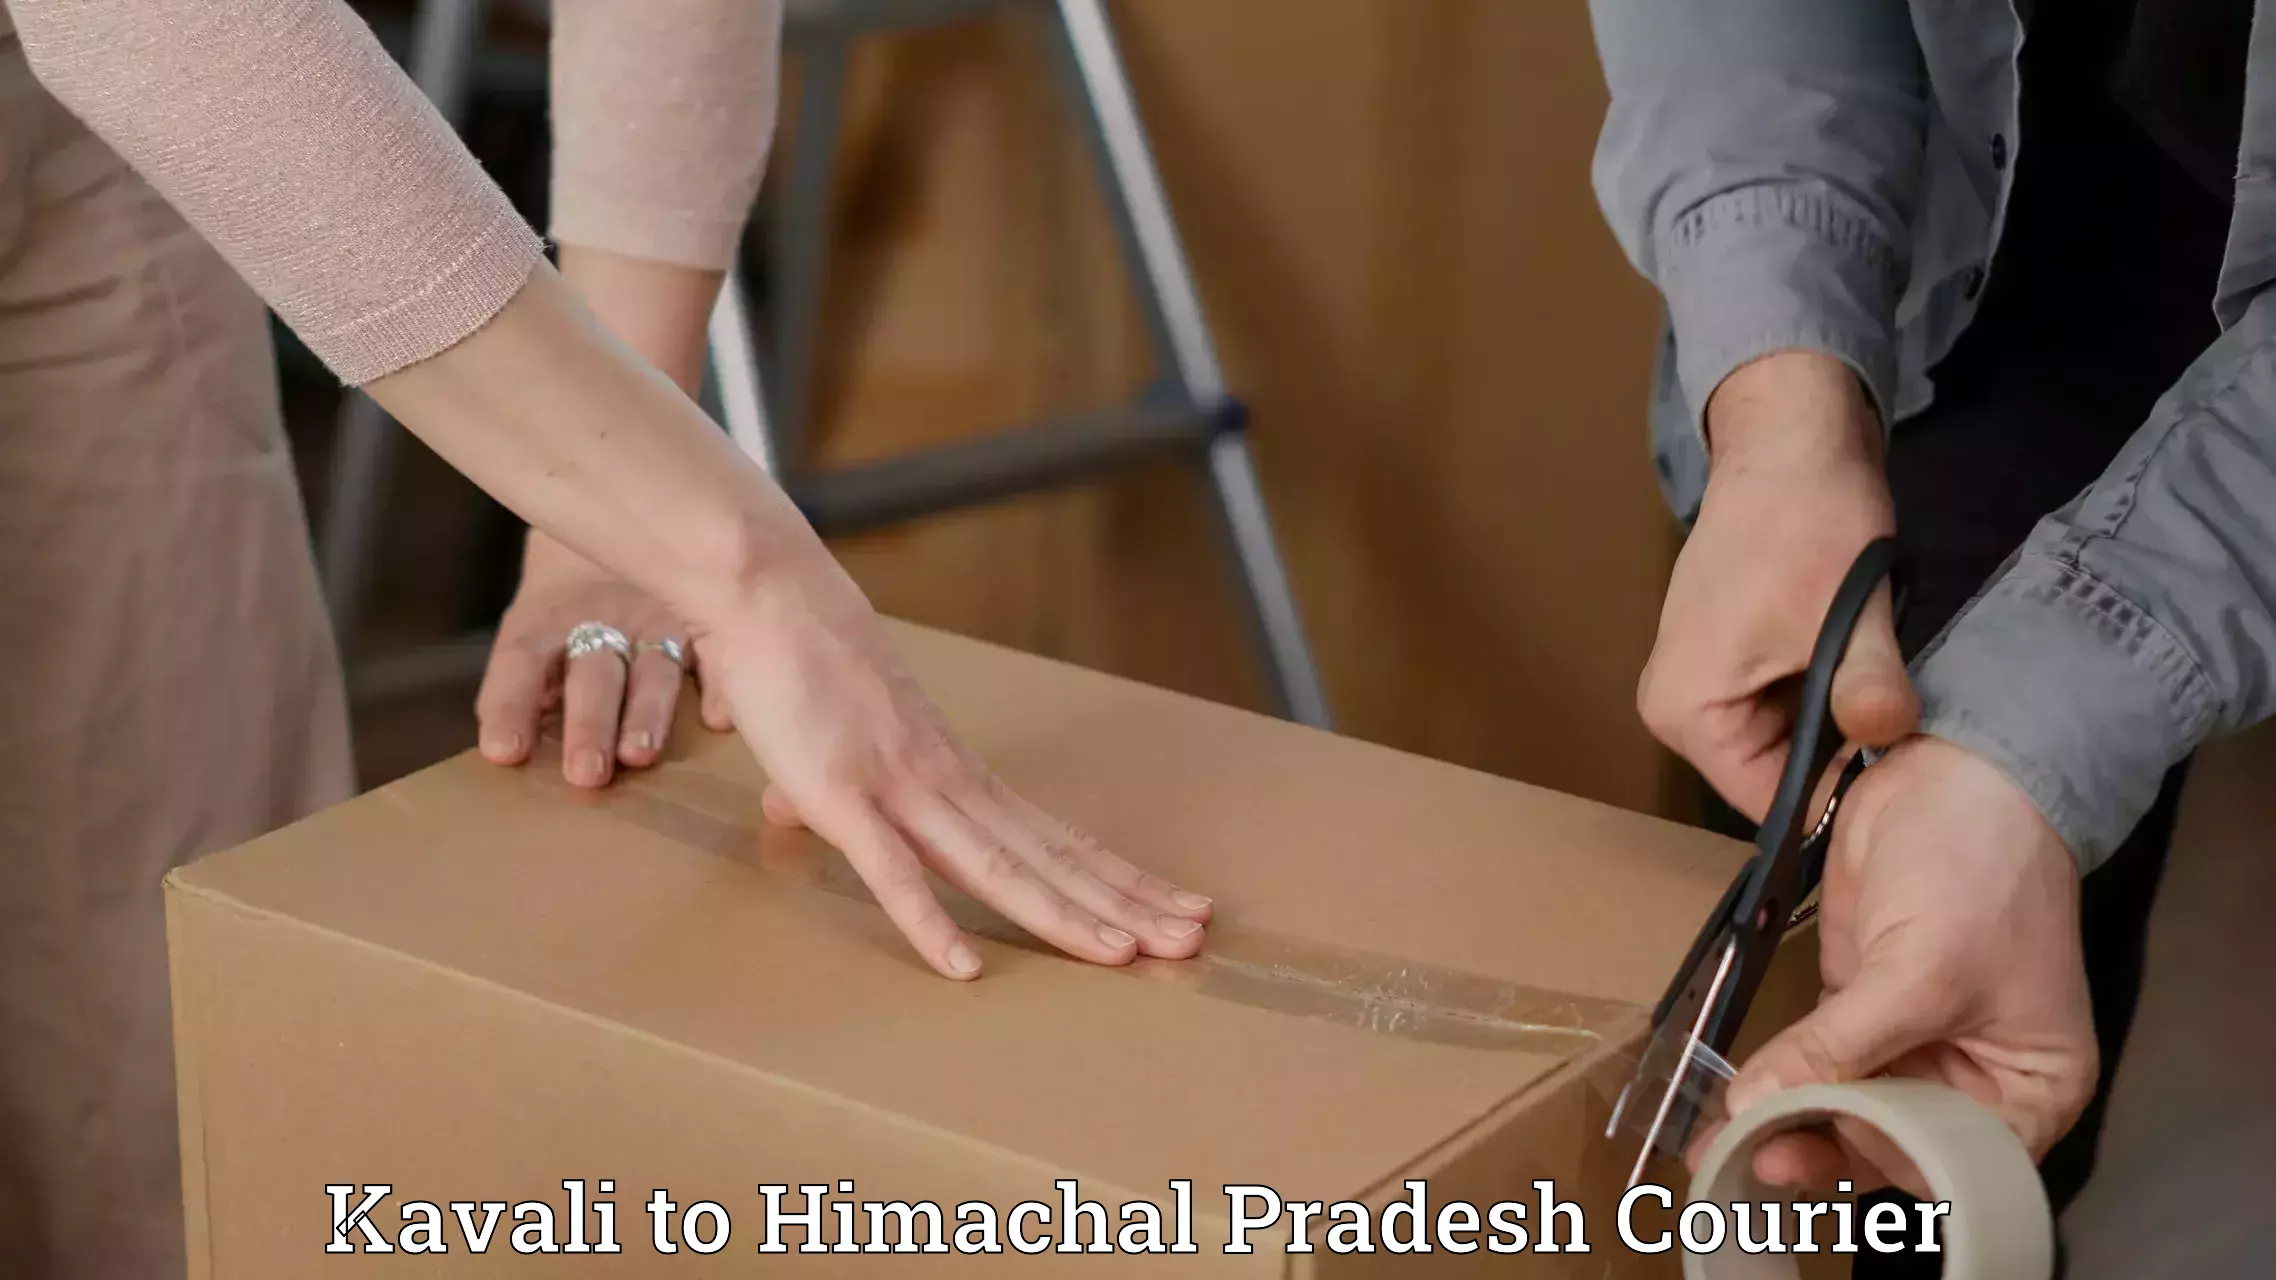 Customizable delivery plans Kavali to Himachal Pradesh